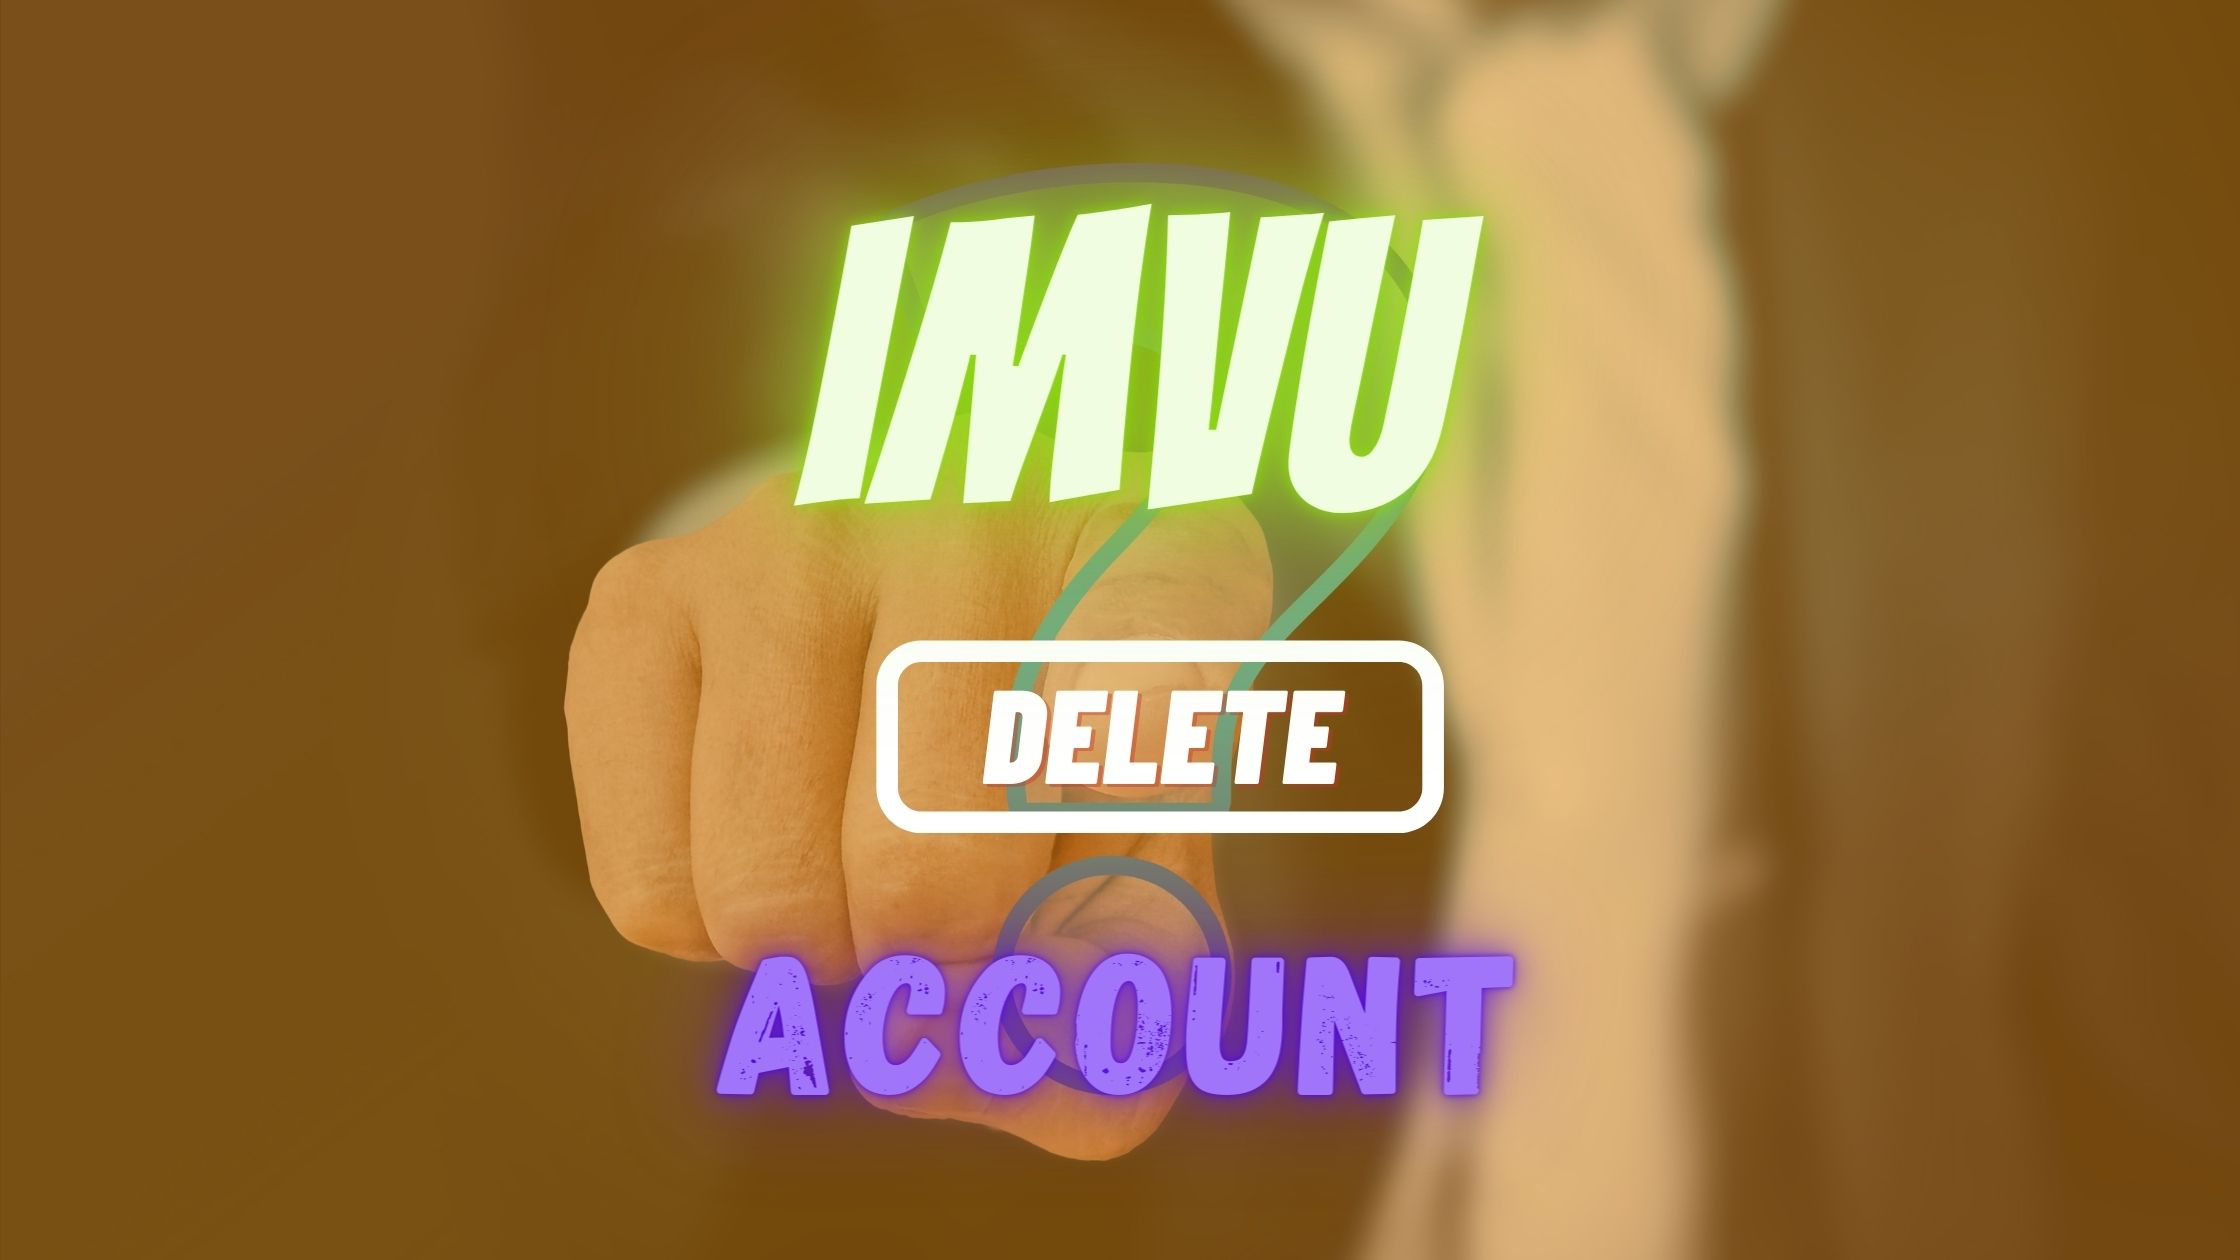 Permanently imvu delete account How To